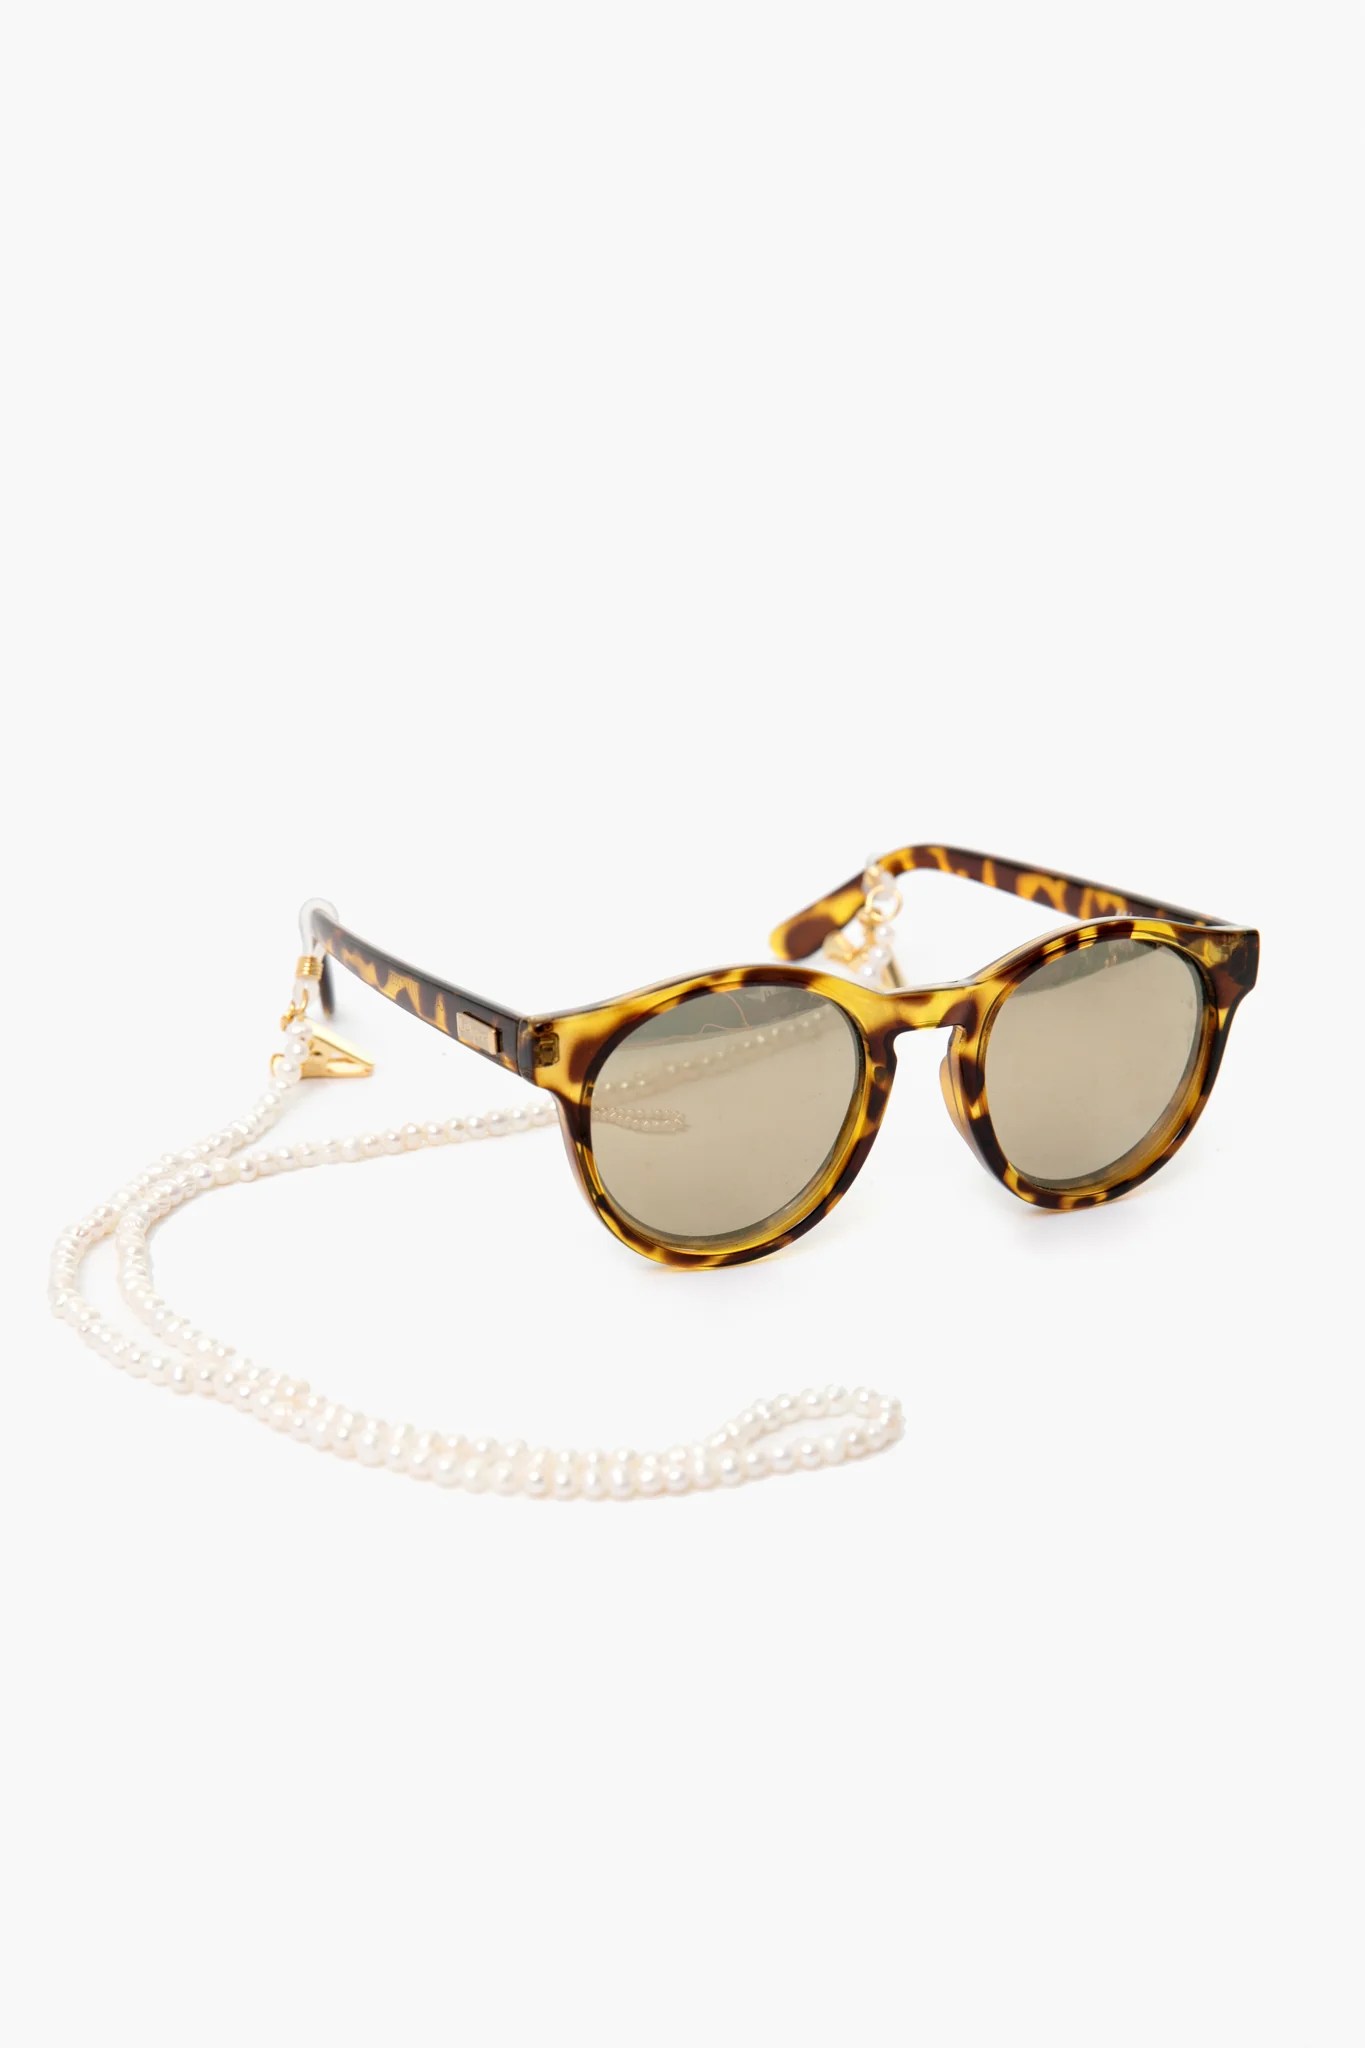 tuckernuck pearl sunglasses chain for a 30th anniversary gift